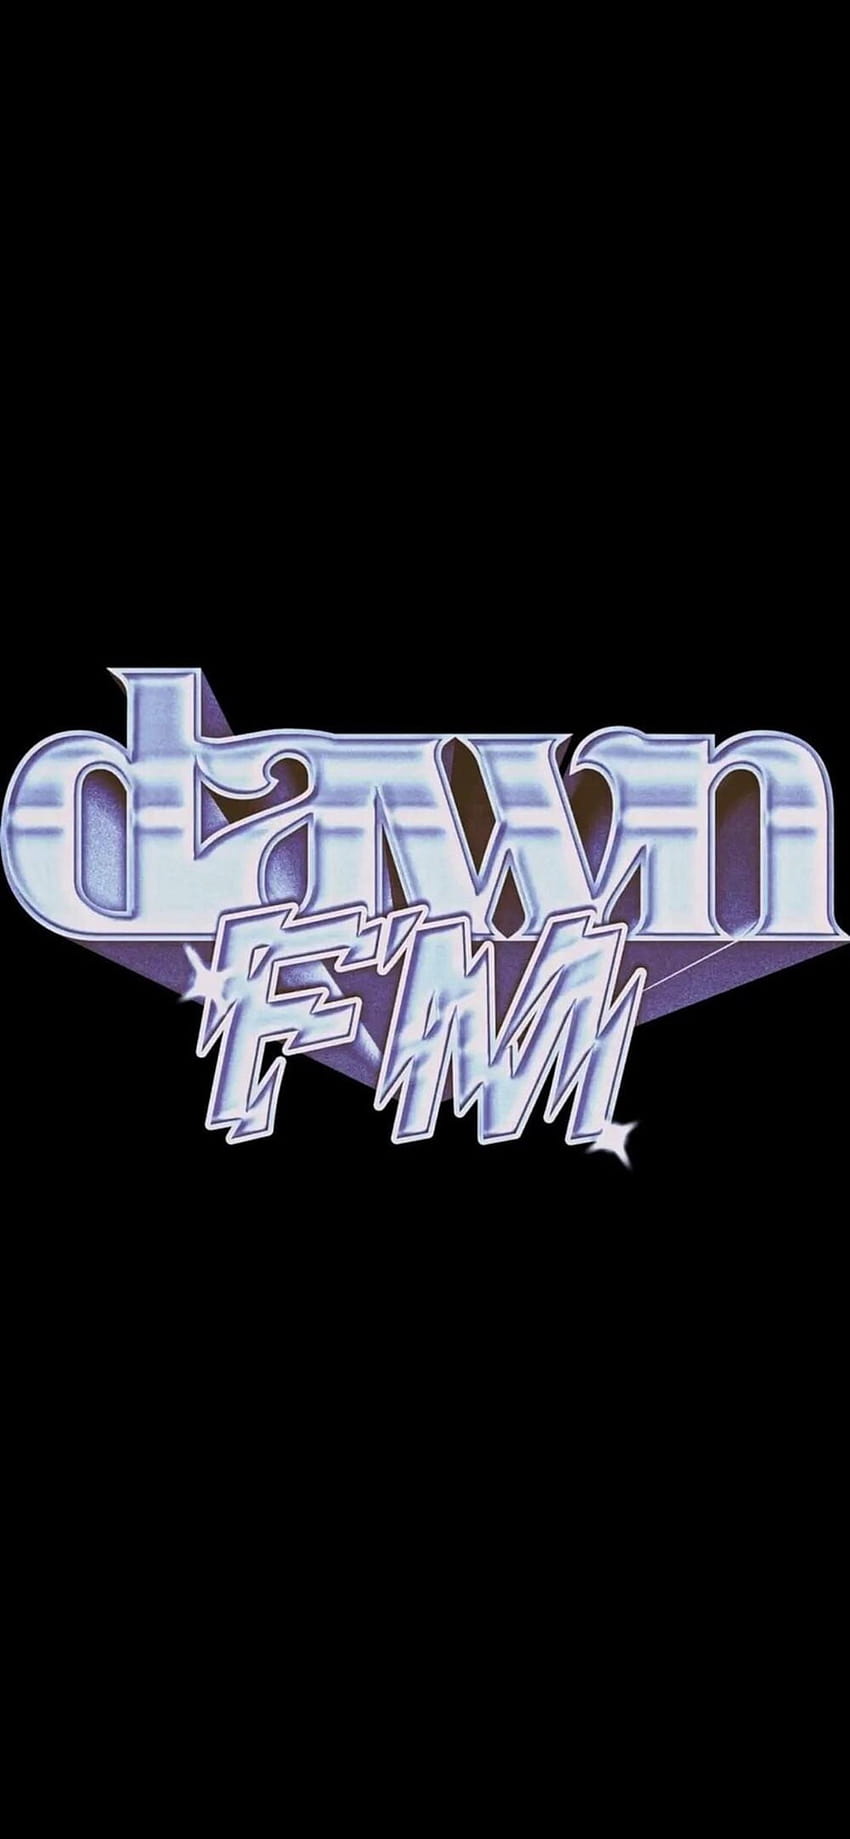 Dawn FM logo : TheWeeknd HD phone wallpaper